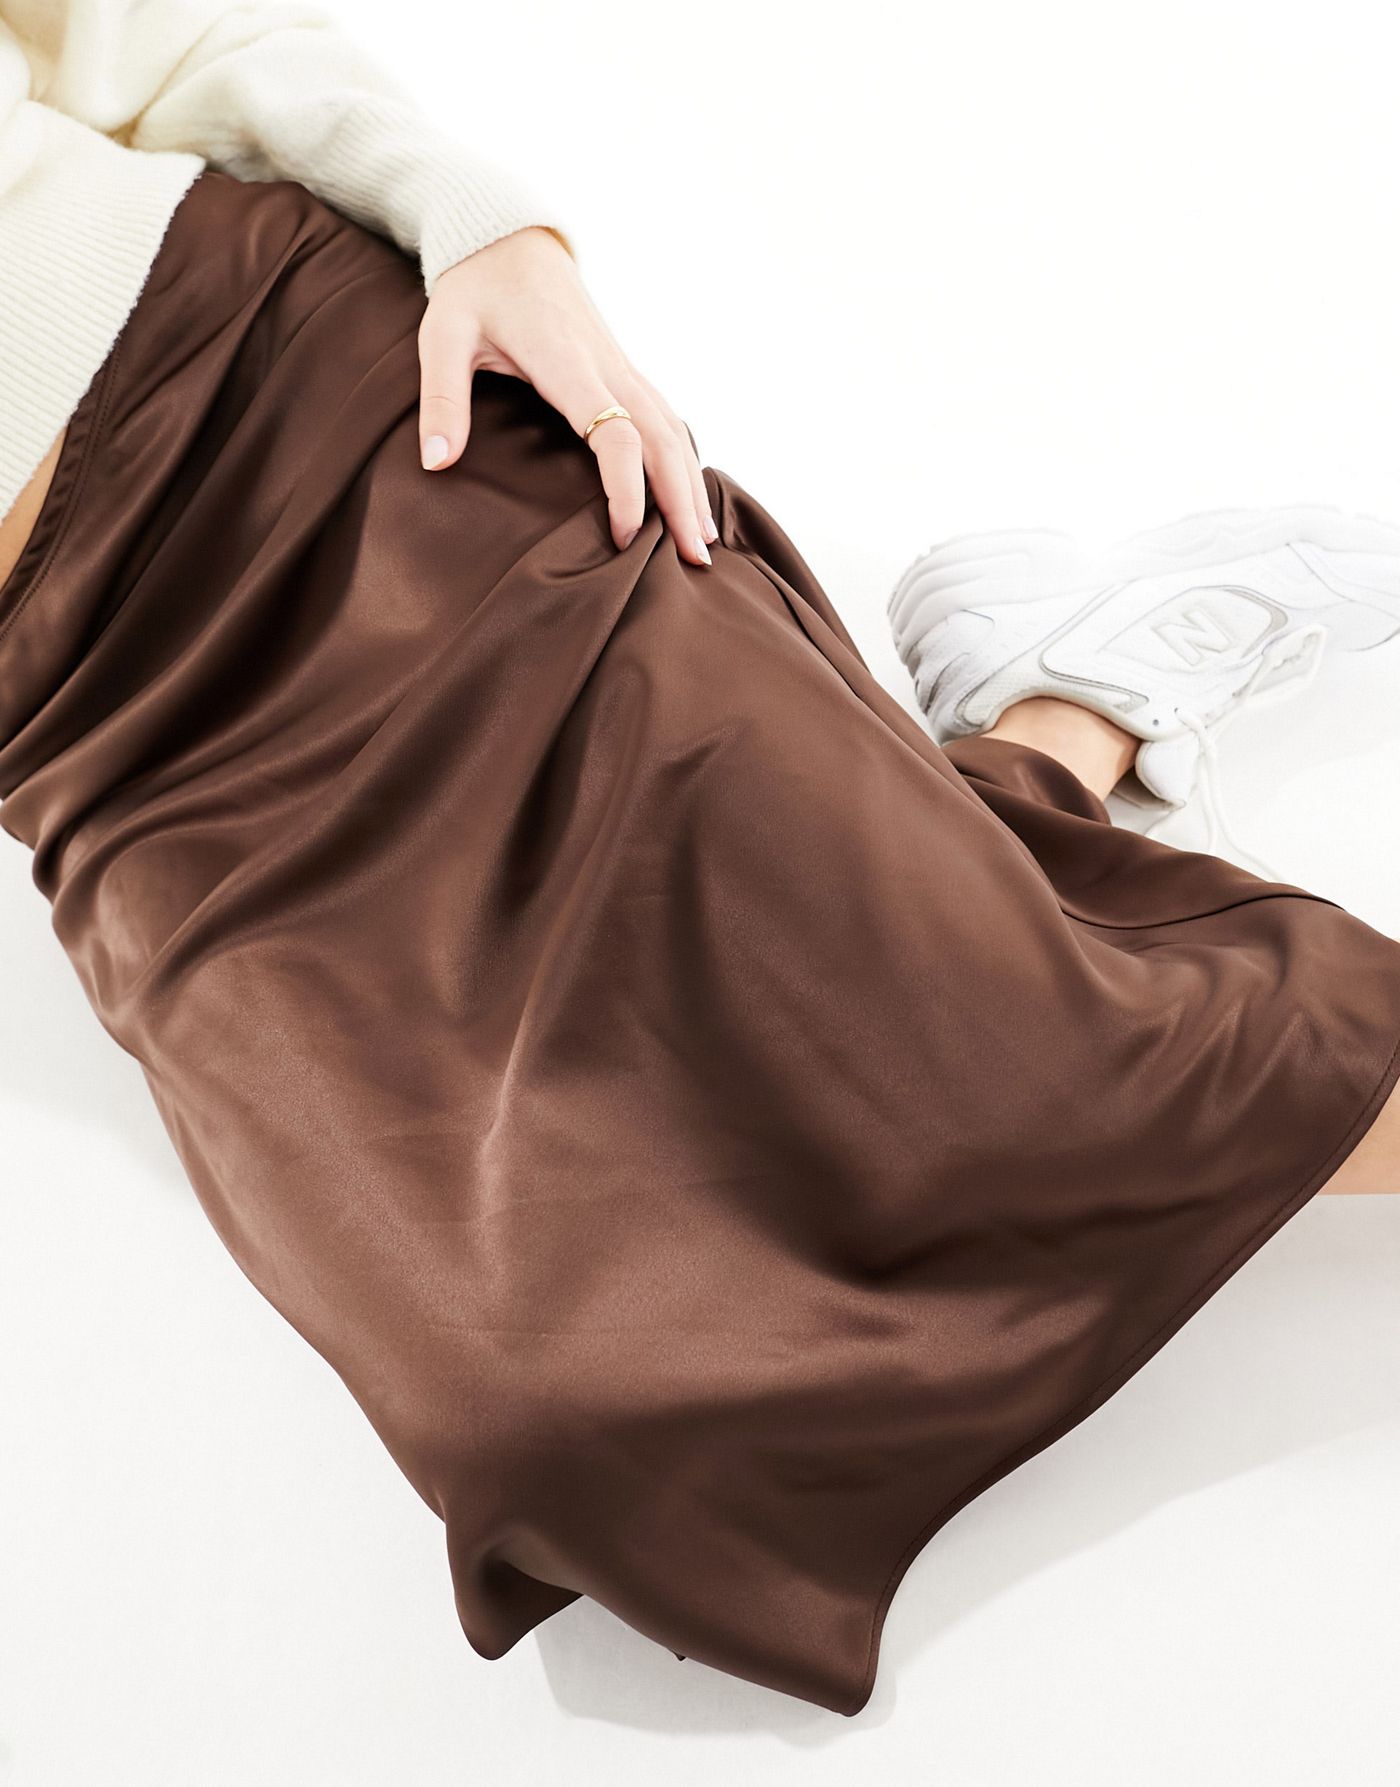 River Island bias maxi skirt in brown satin